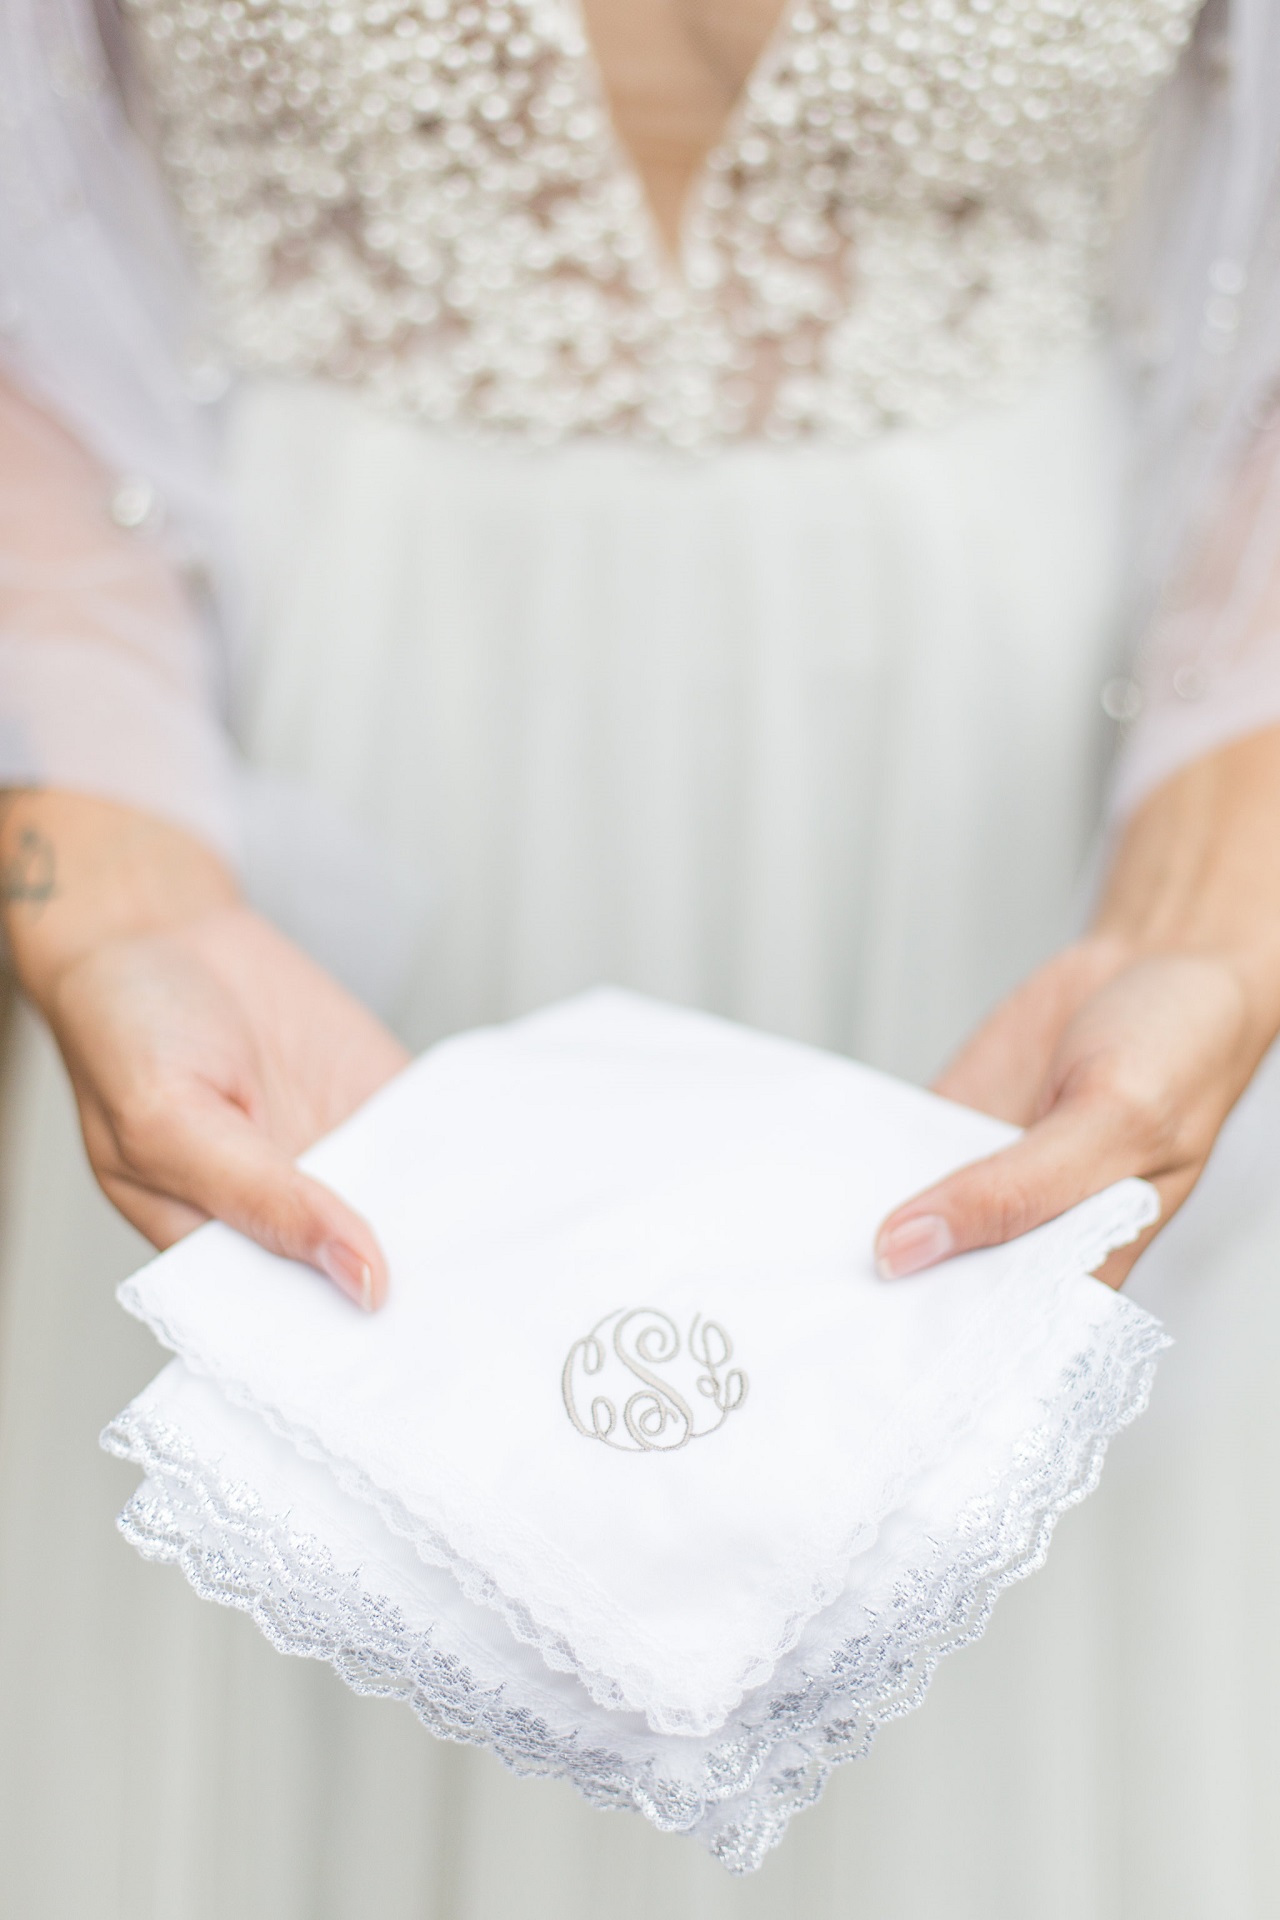 Silver lace monogrammed handkerchief